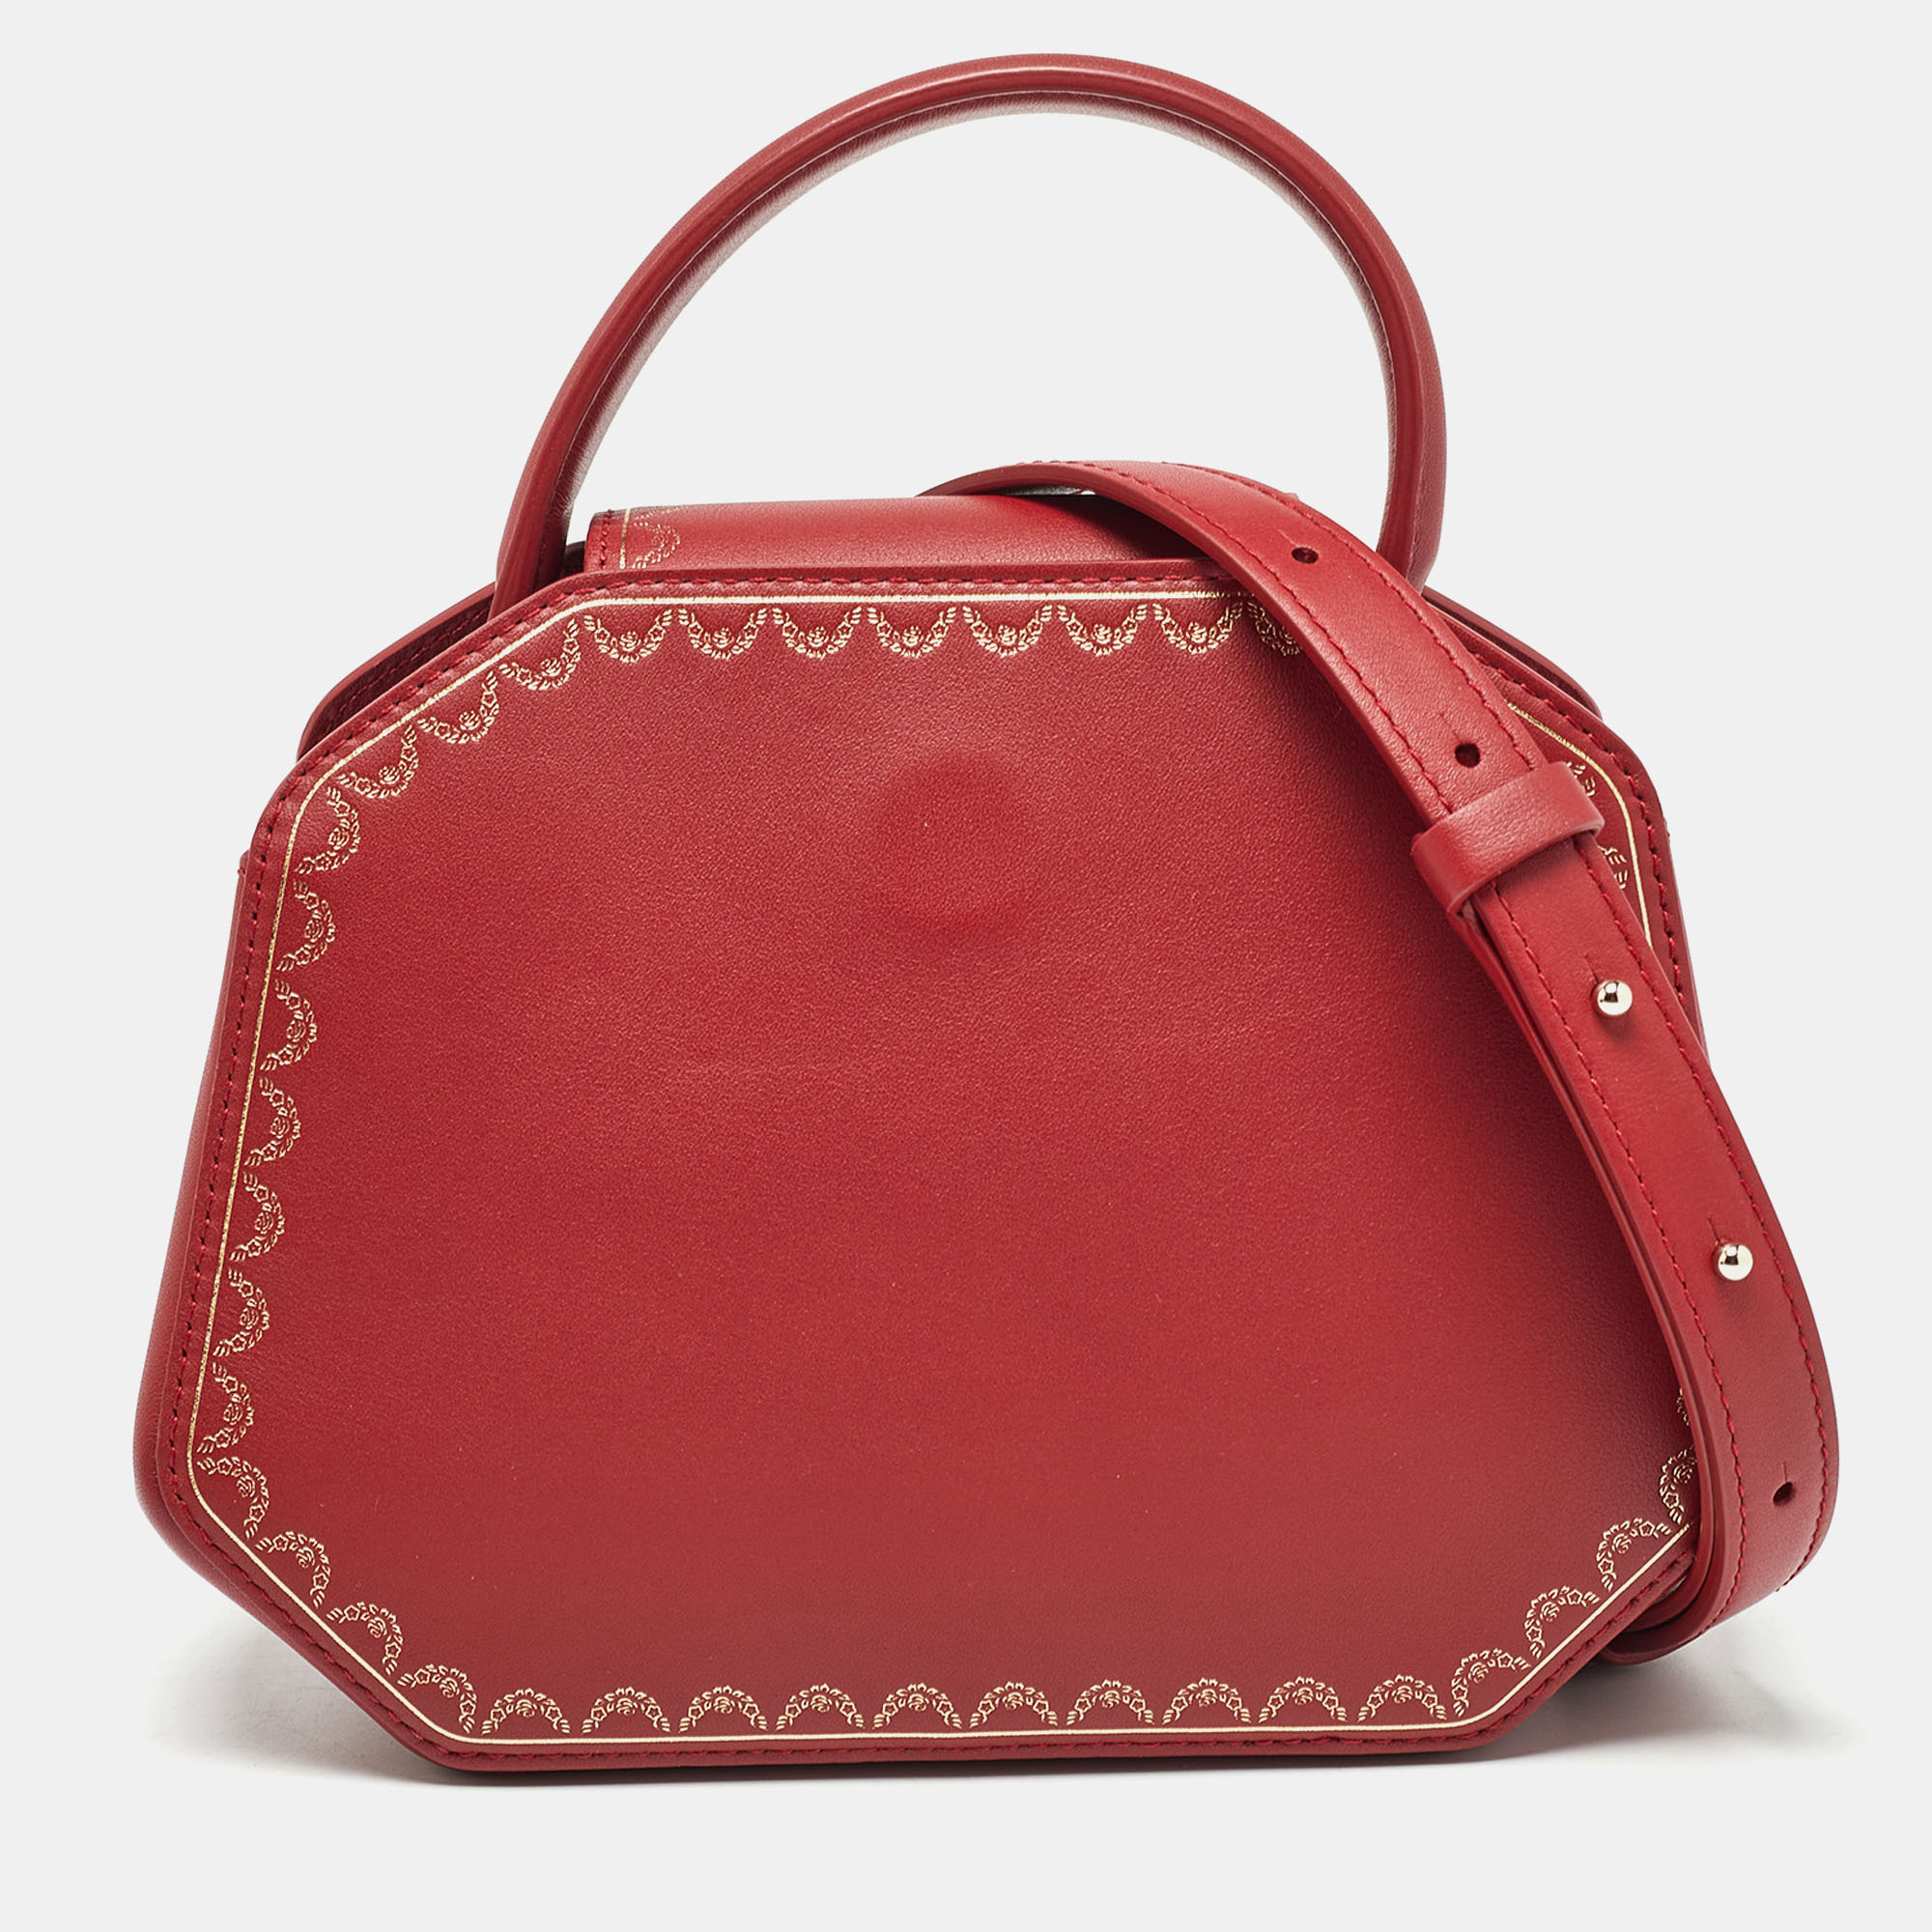 Cartier red leather mini guirlande de cartier top handle bag